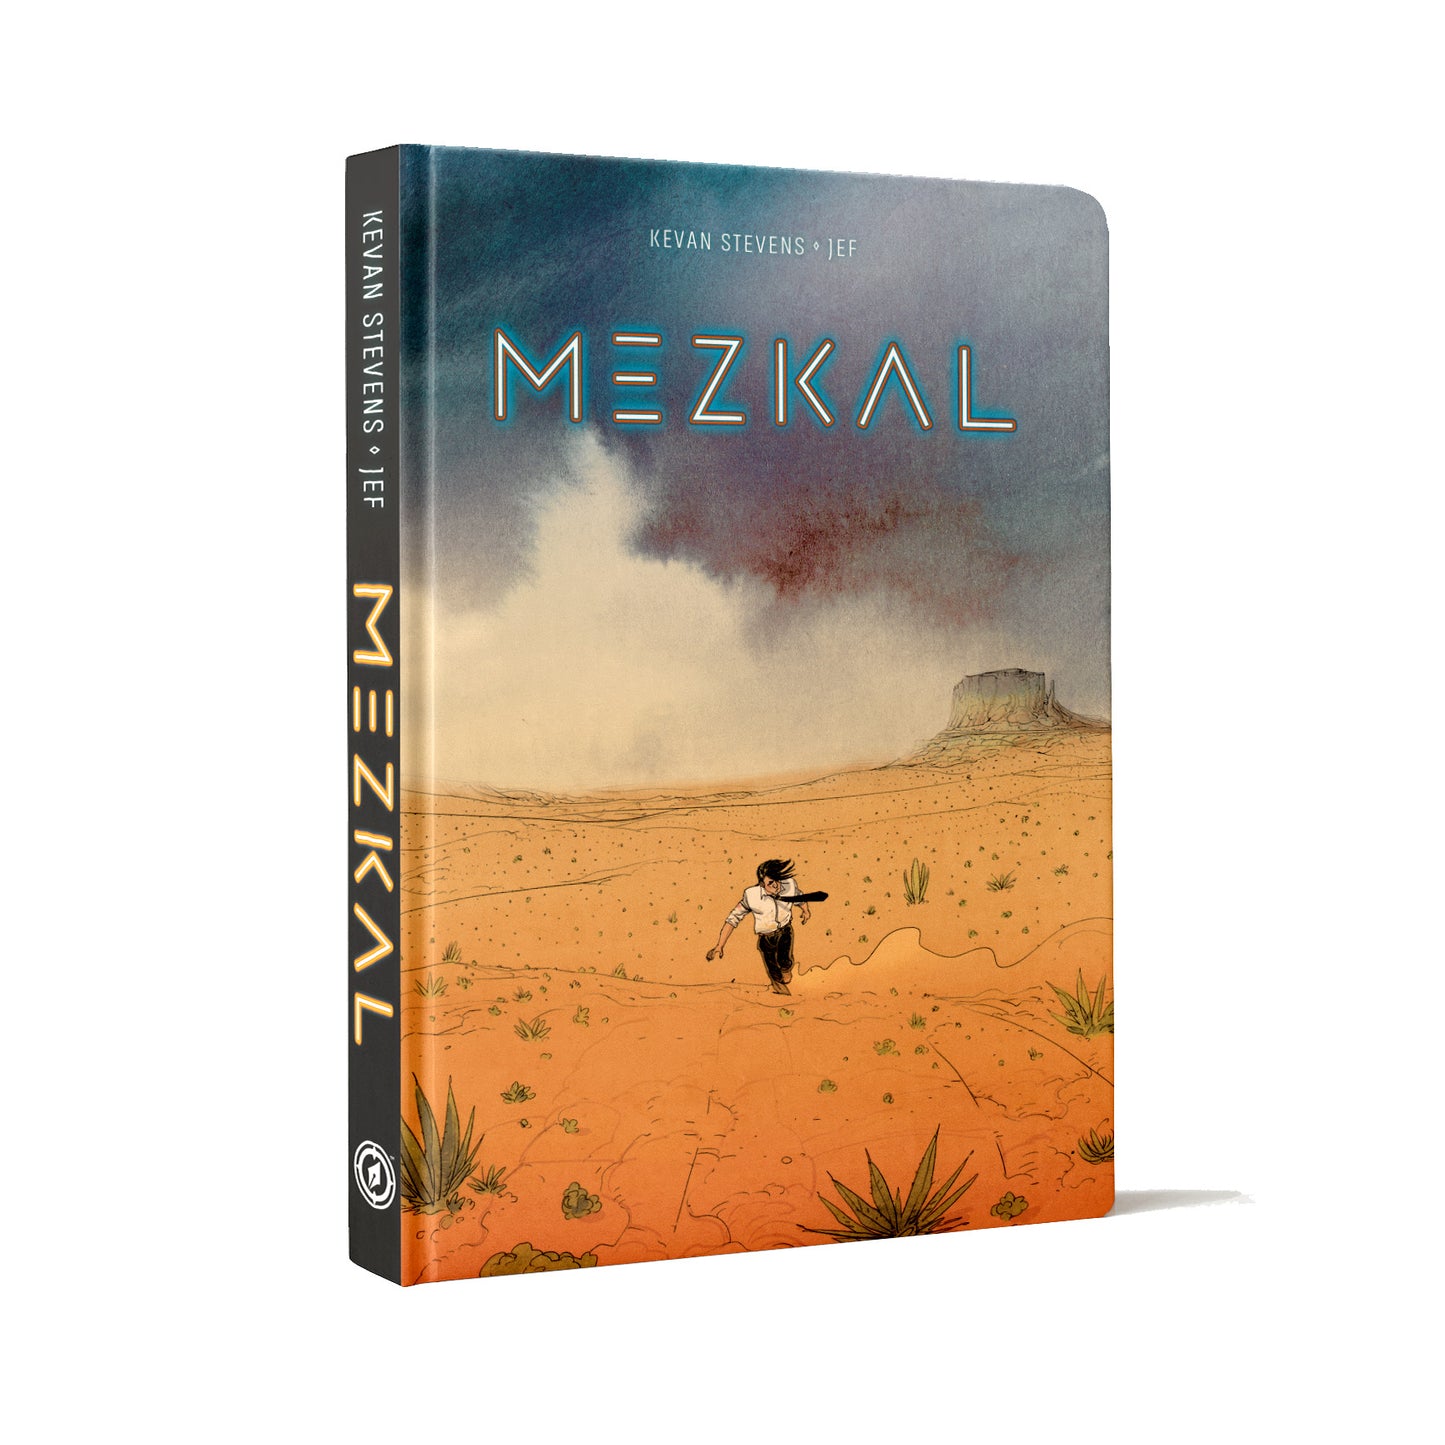 MEZKAL by Kevan Stevens and Jef